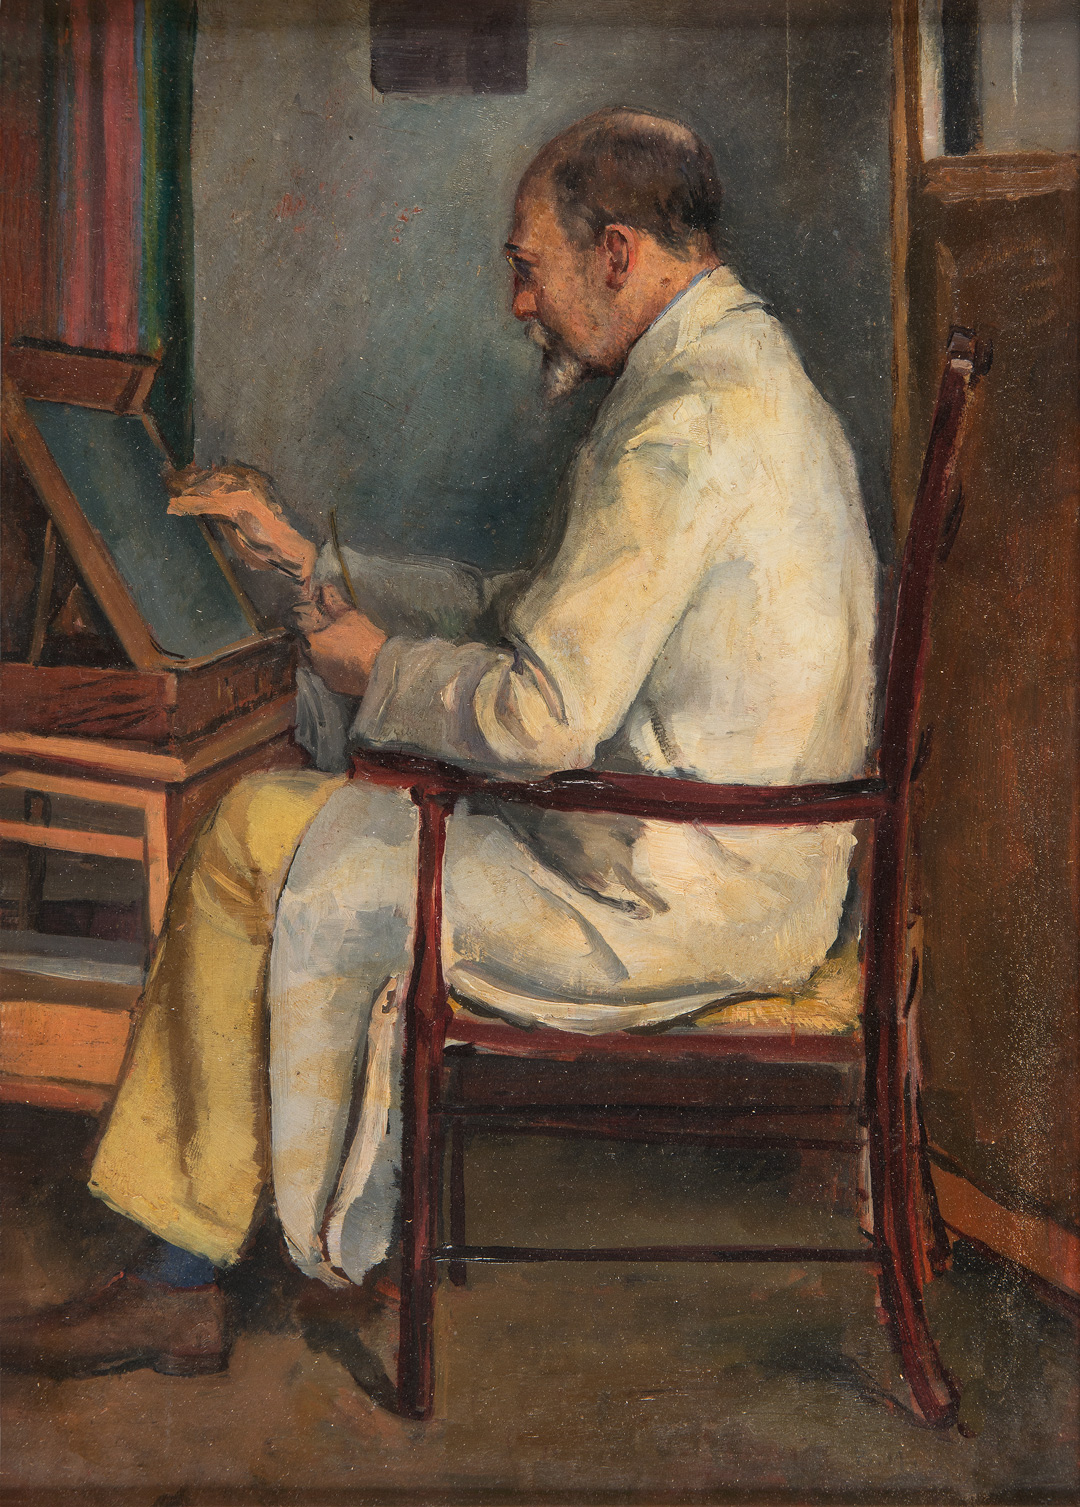 Domenico Trentacoste che dipinge, 1922